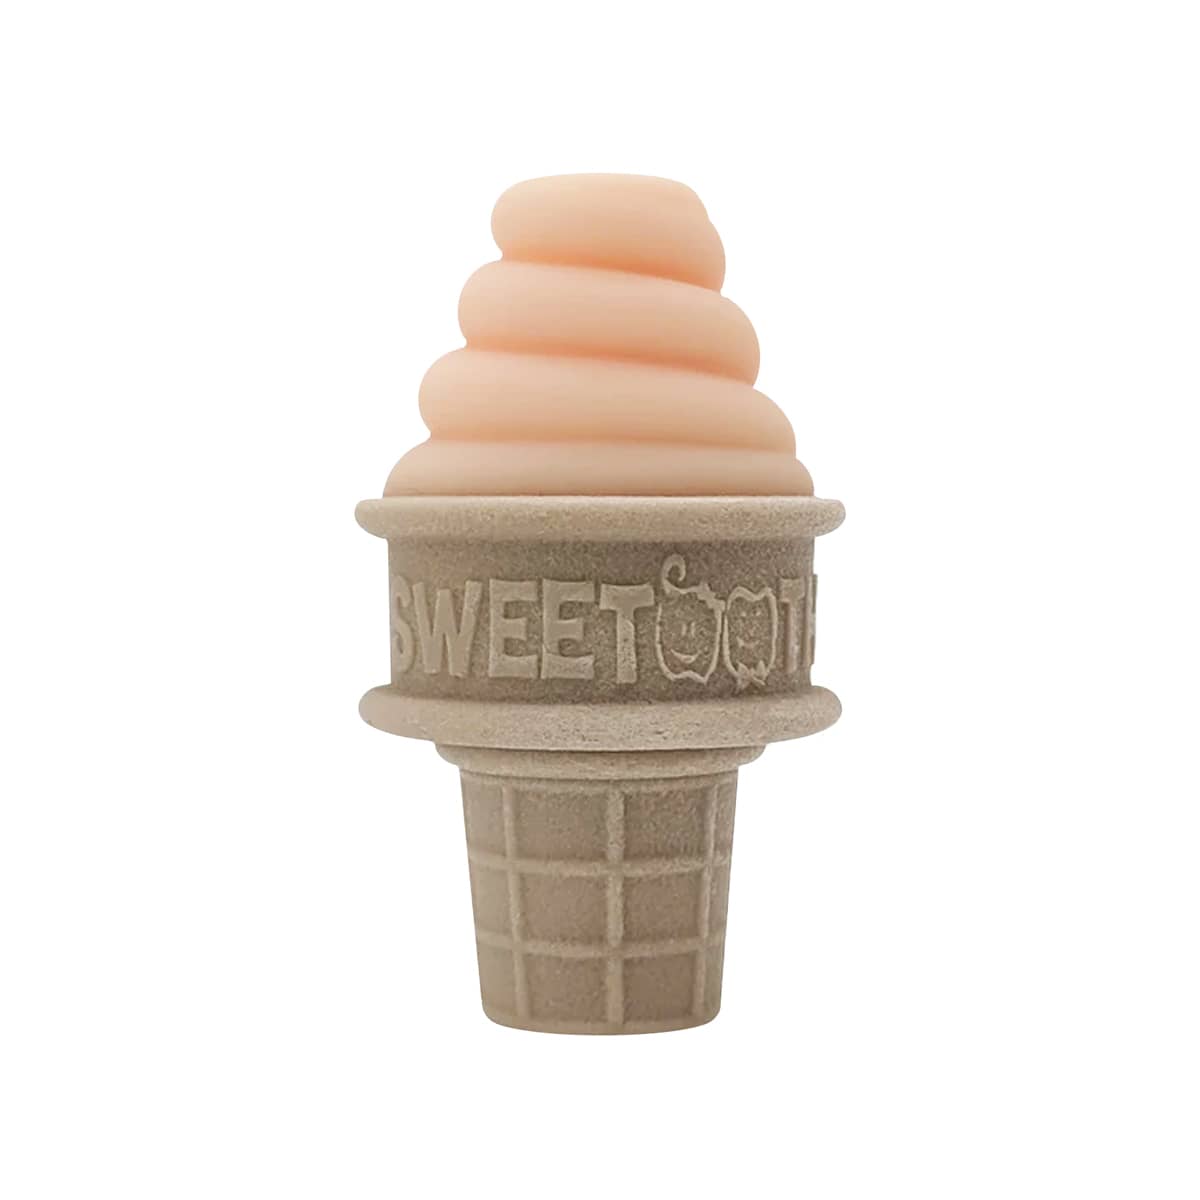 SweeTooth Baby Ice Cream Teether - Adorable Orange